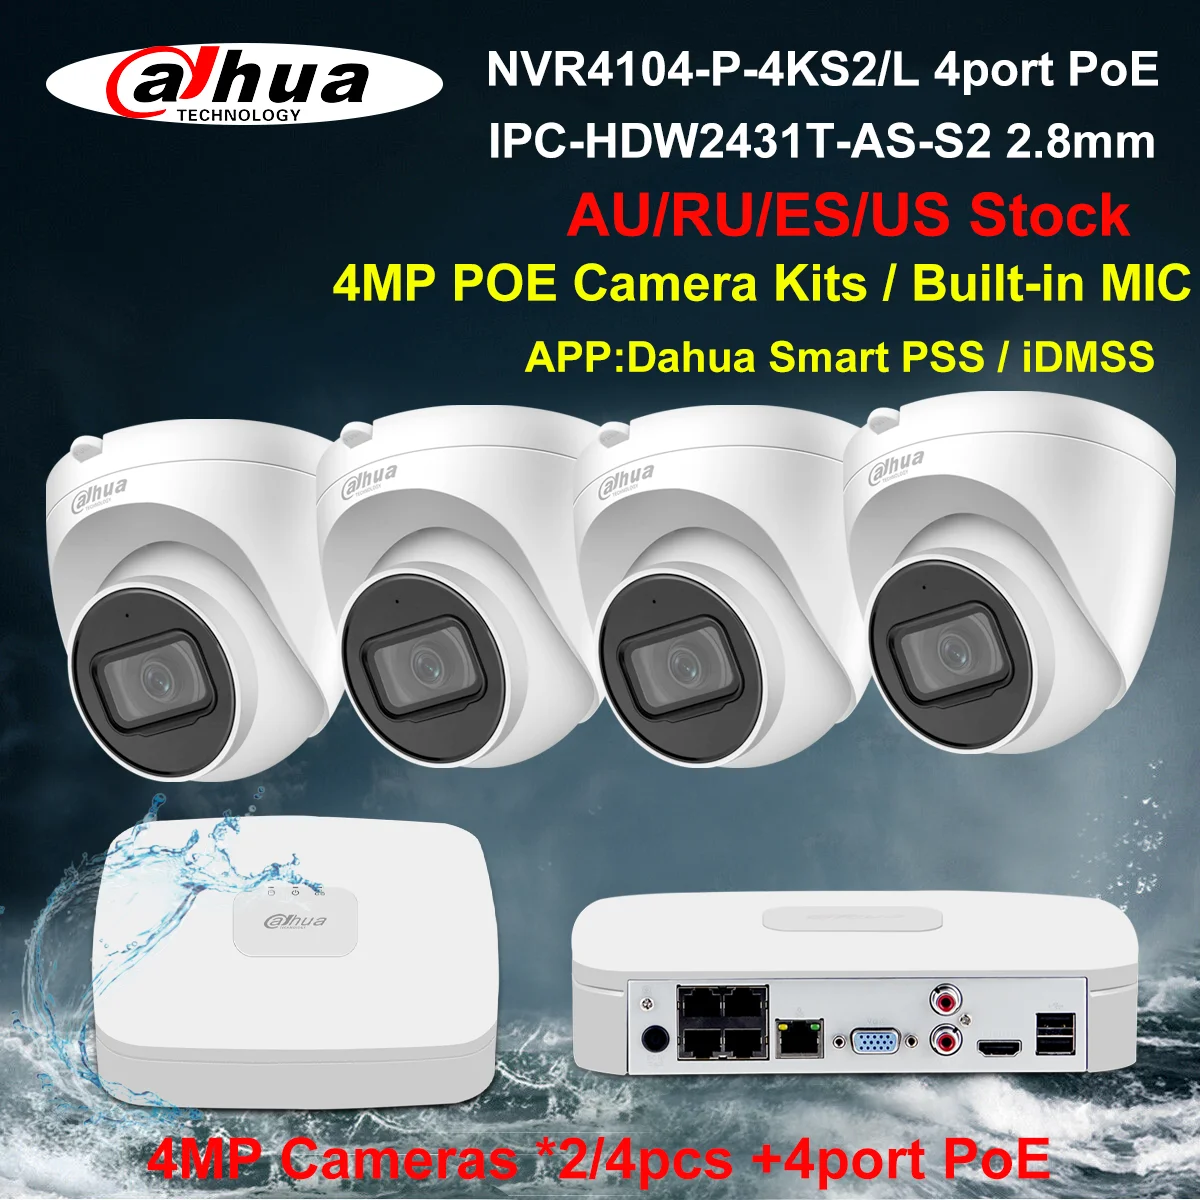 

Dahua Security Camera System 4MP PoE Kits IPC-HDW2431T-AS-S2 NVR4104-P-4KS2/L 4CH NVR Recorder 2/4pcs IP Camera Build in Mic